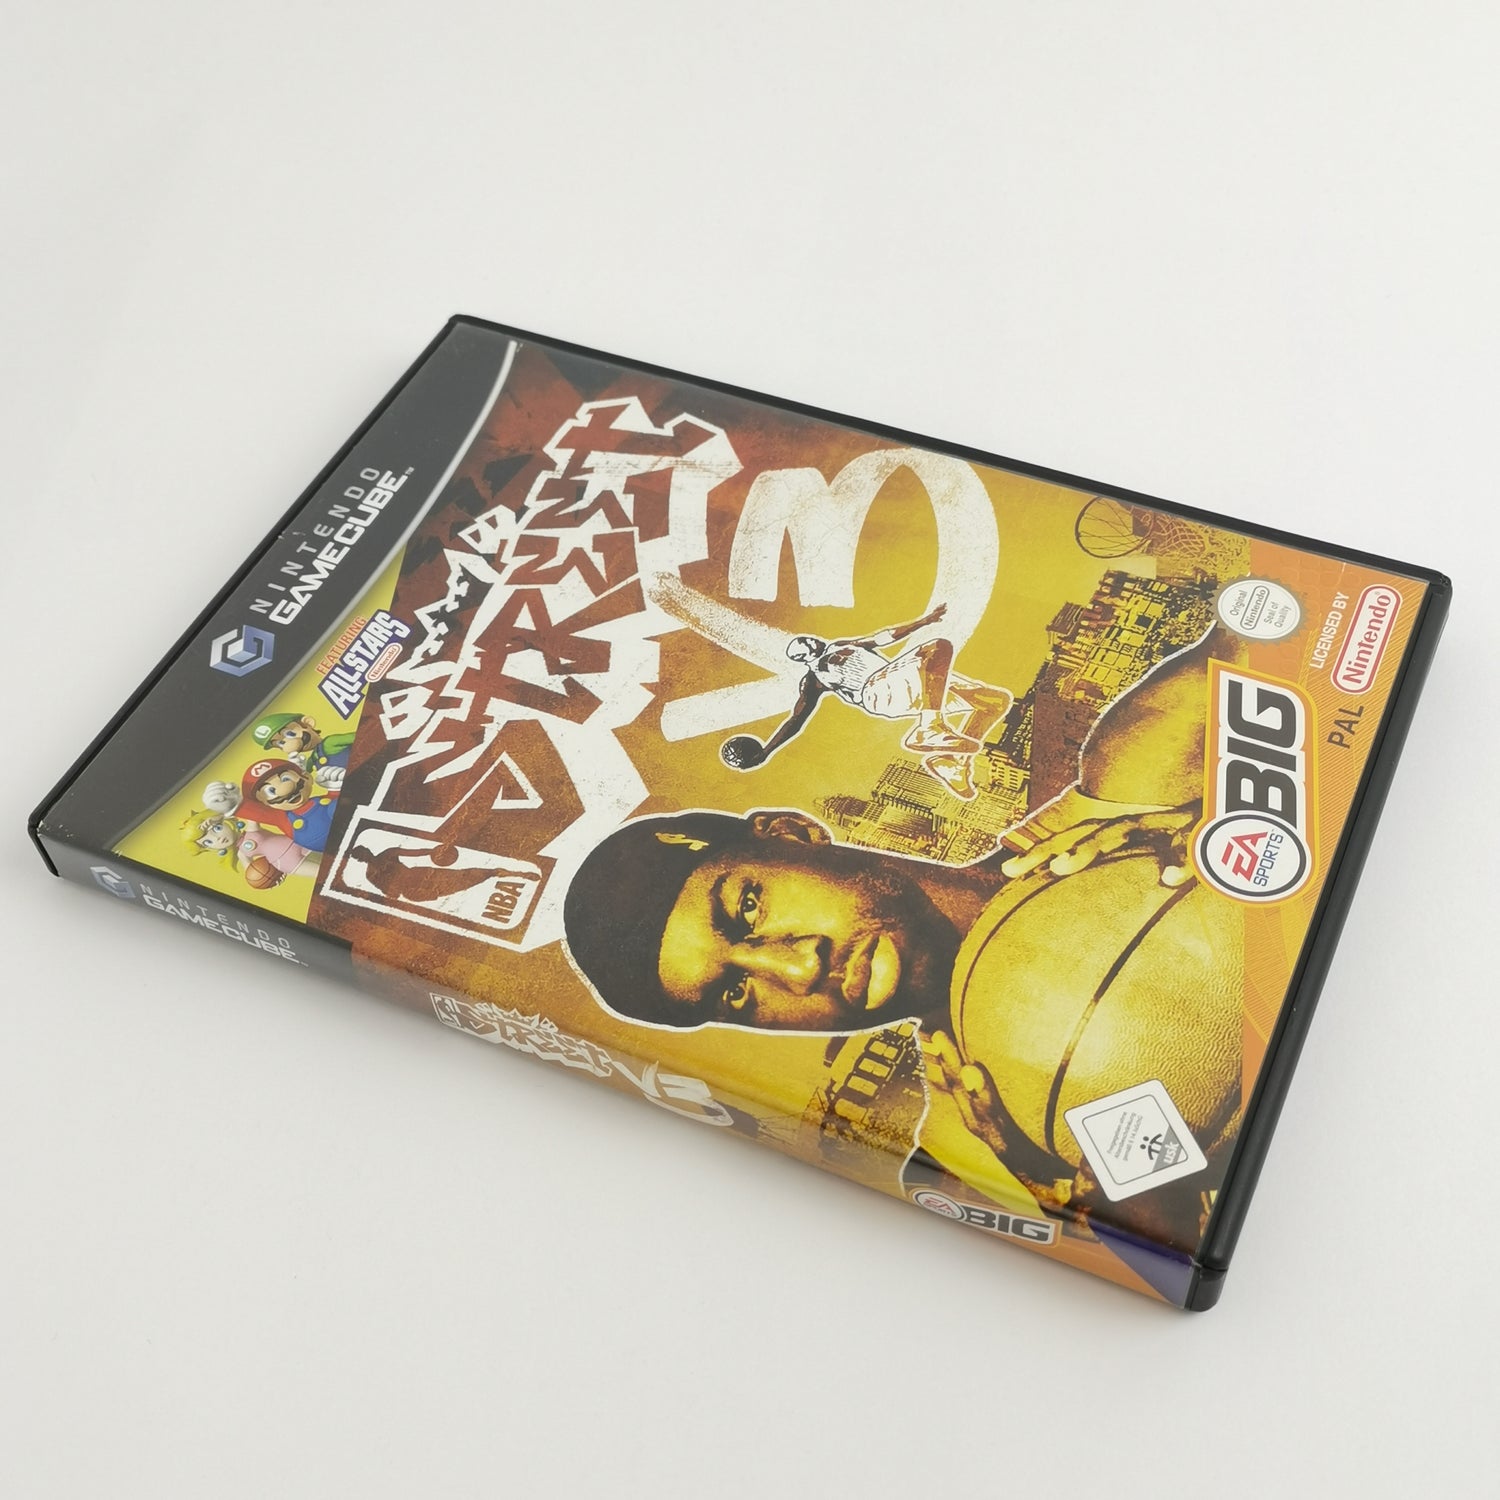 Nintendo Gamecube Spiel : NBA Street V3 - Basketball | dt. PAL Version - OVP